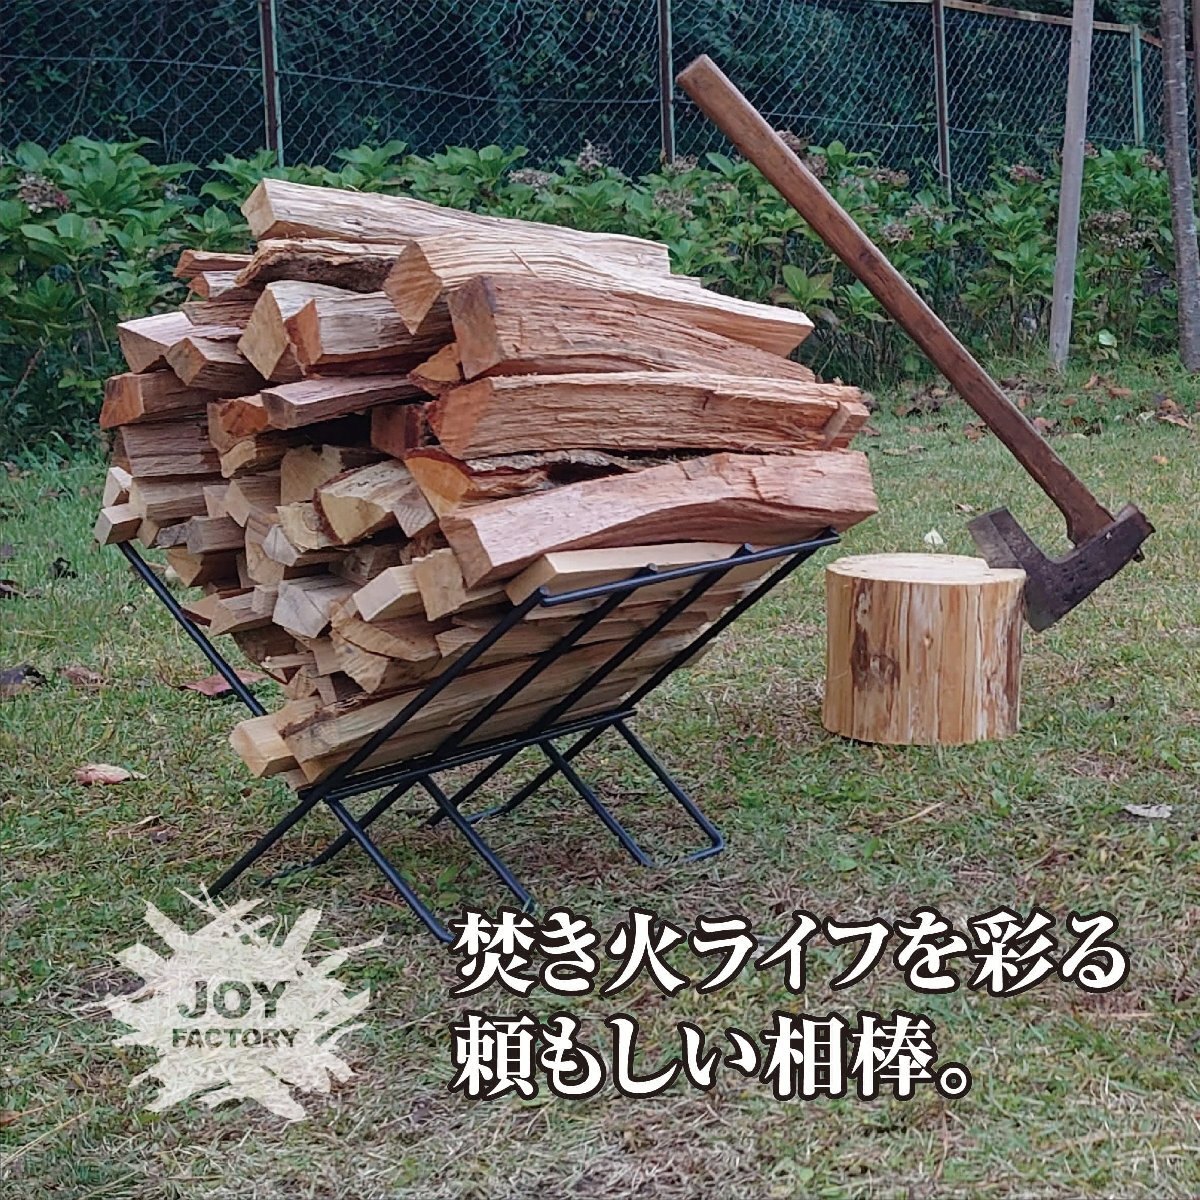 【Joyfactory】 JOY 焚き火用薪スタンド [IS-18] 日本製 収納袋付 組立式 コンパクト W39.5×D30×H24.5cm 耐荷_画像3